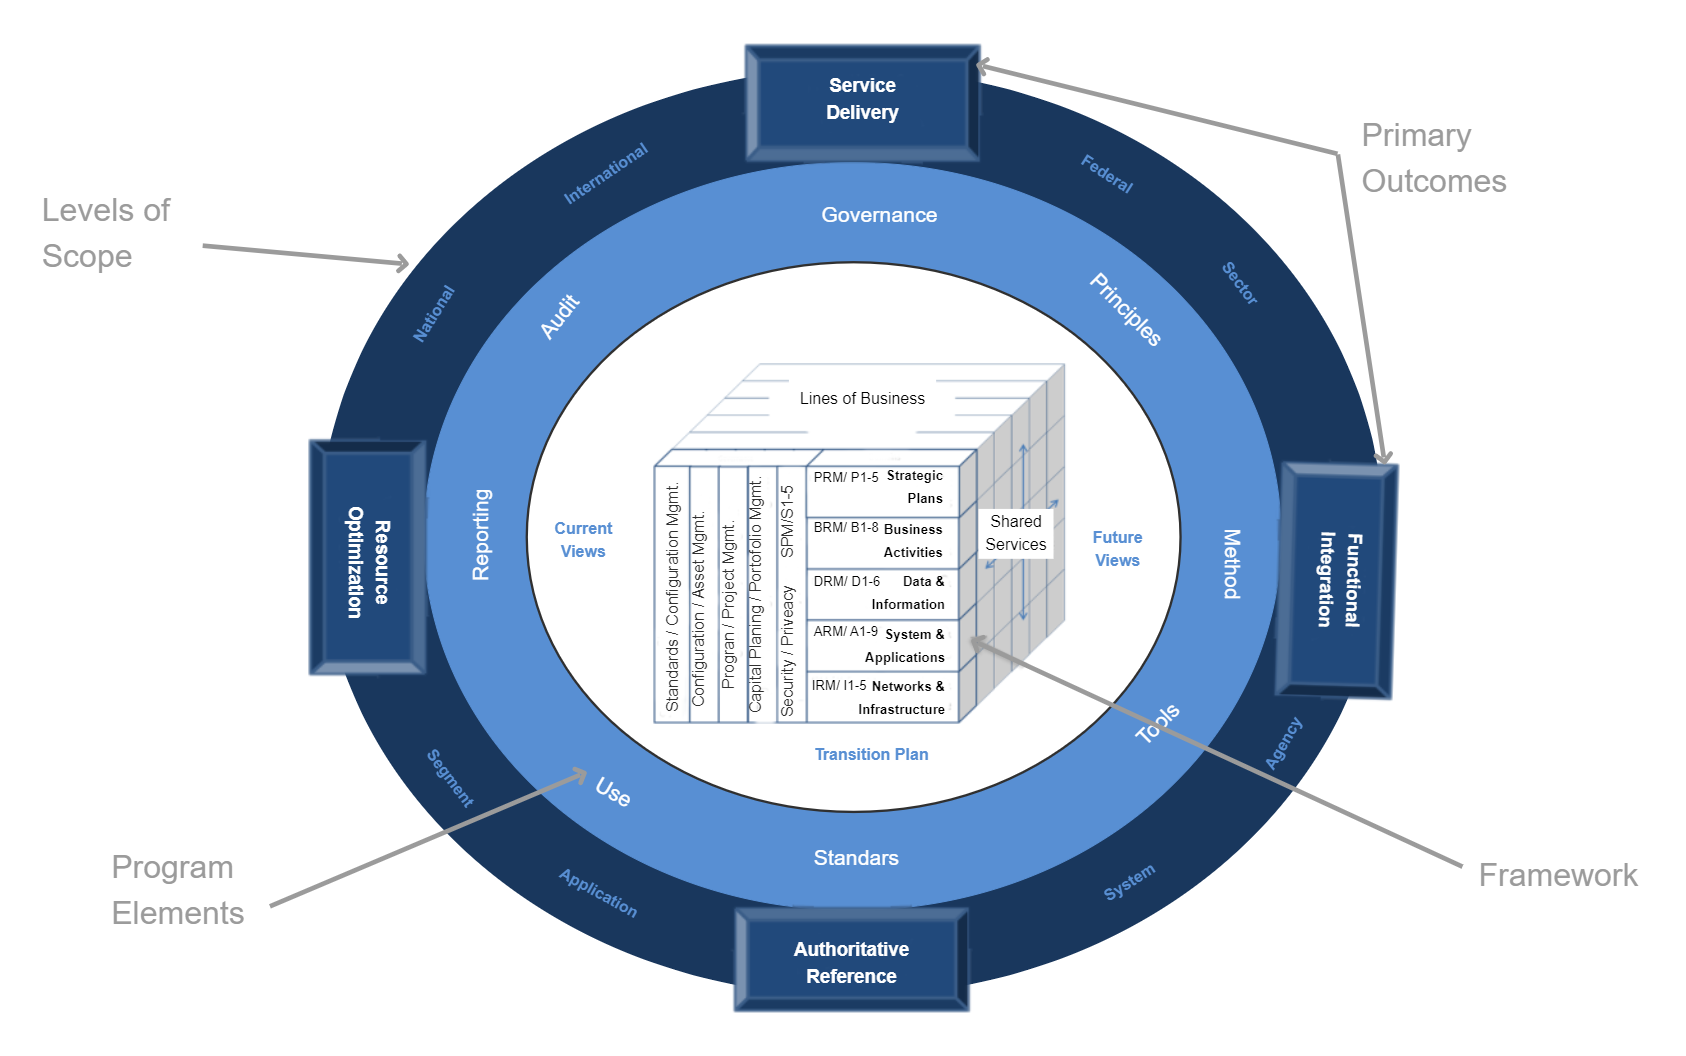 Basic Elements of Federal Enterprise Architecture